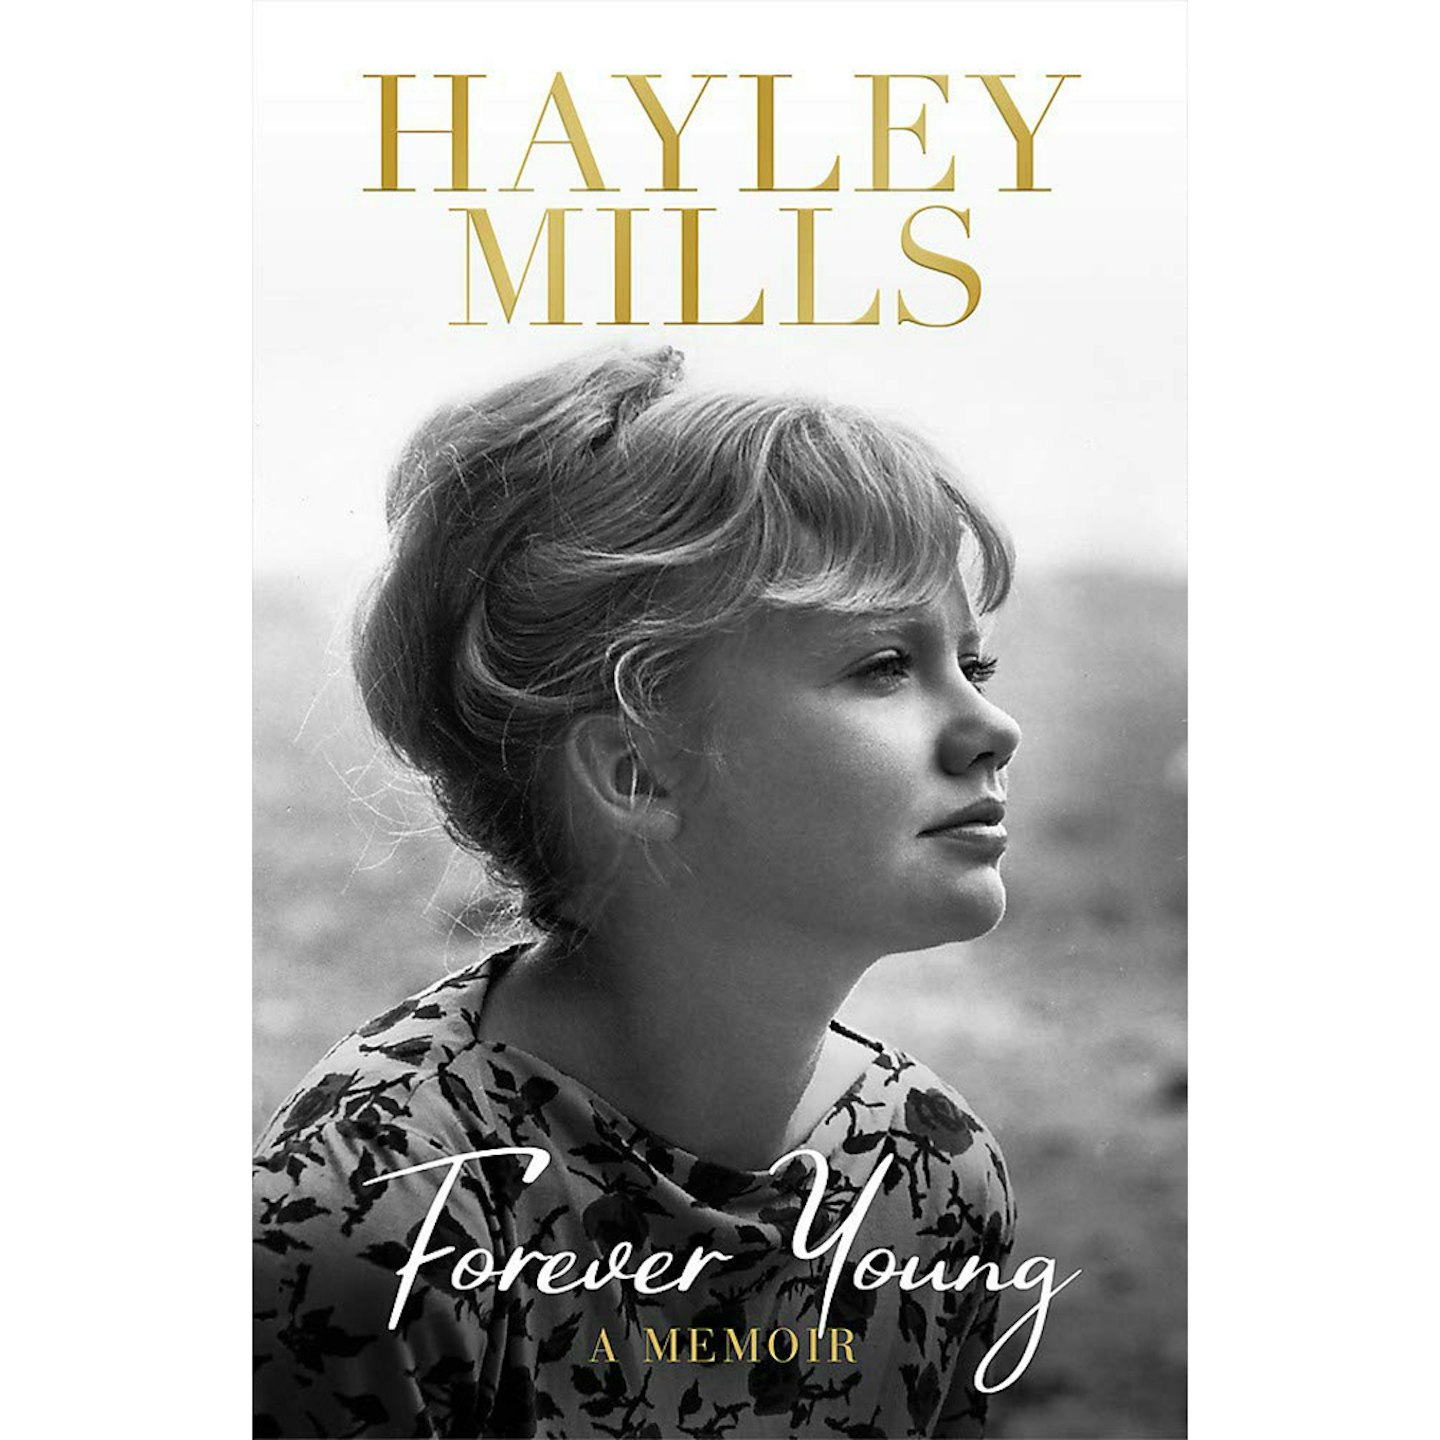 Forever Young: A Memoir